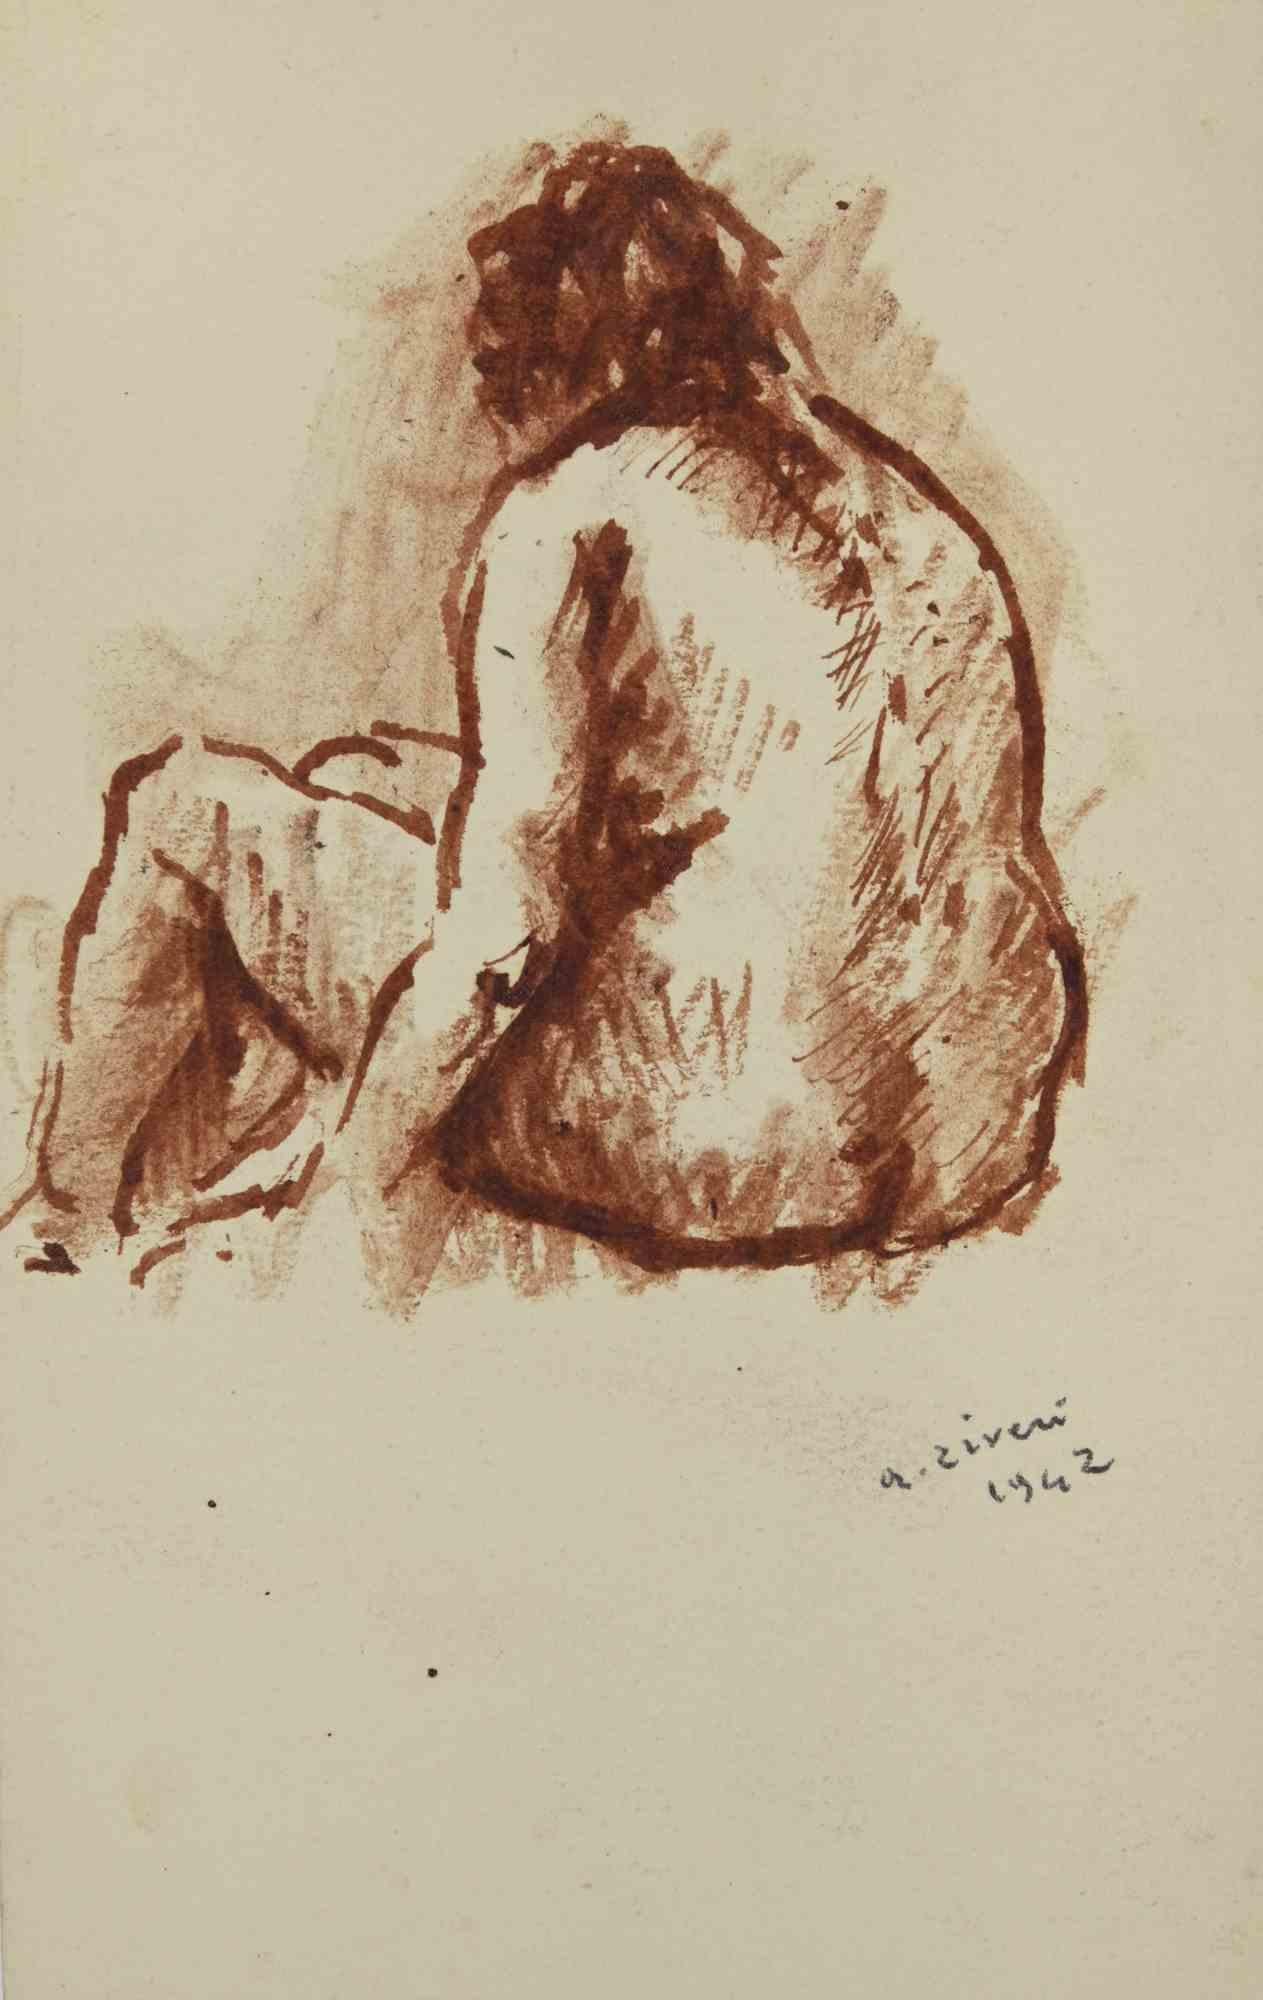 The Nude - Dessin d'Alberto Ziveri - 1942